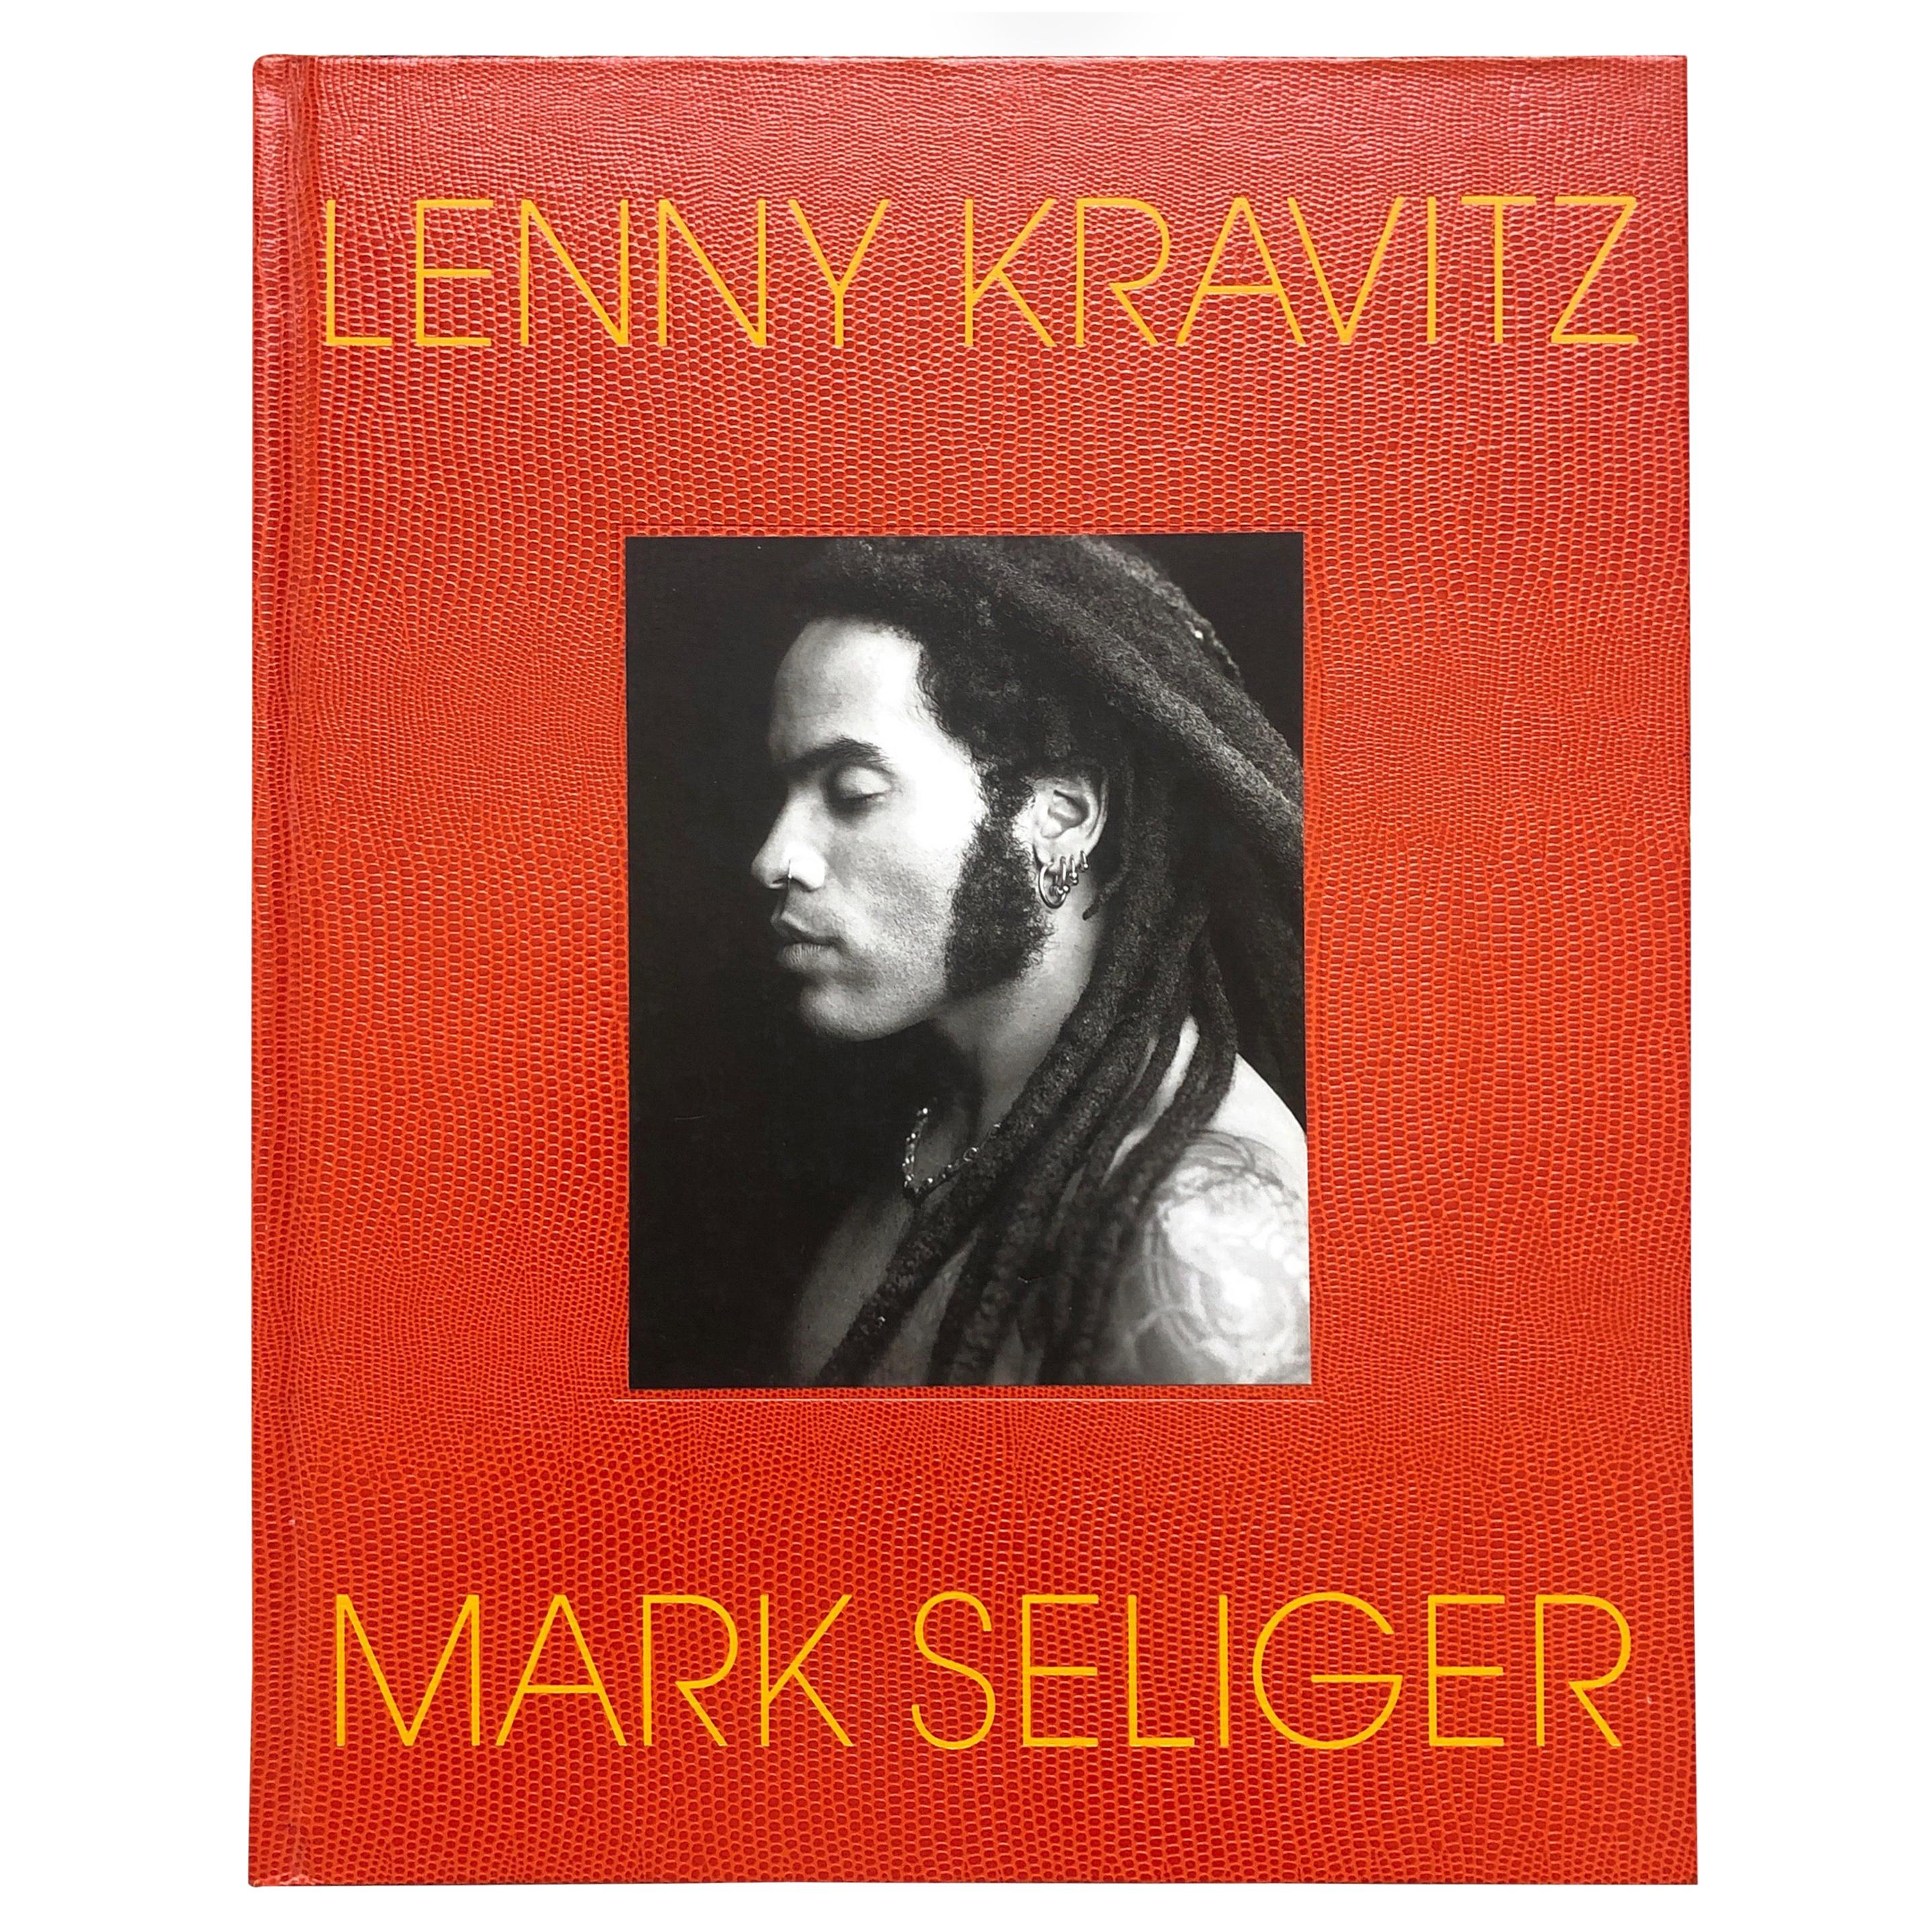 Lenny Kravitz by Mark Seliger Hardcover Book